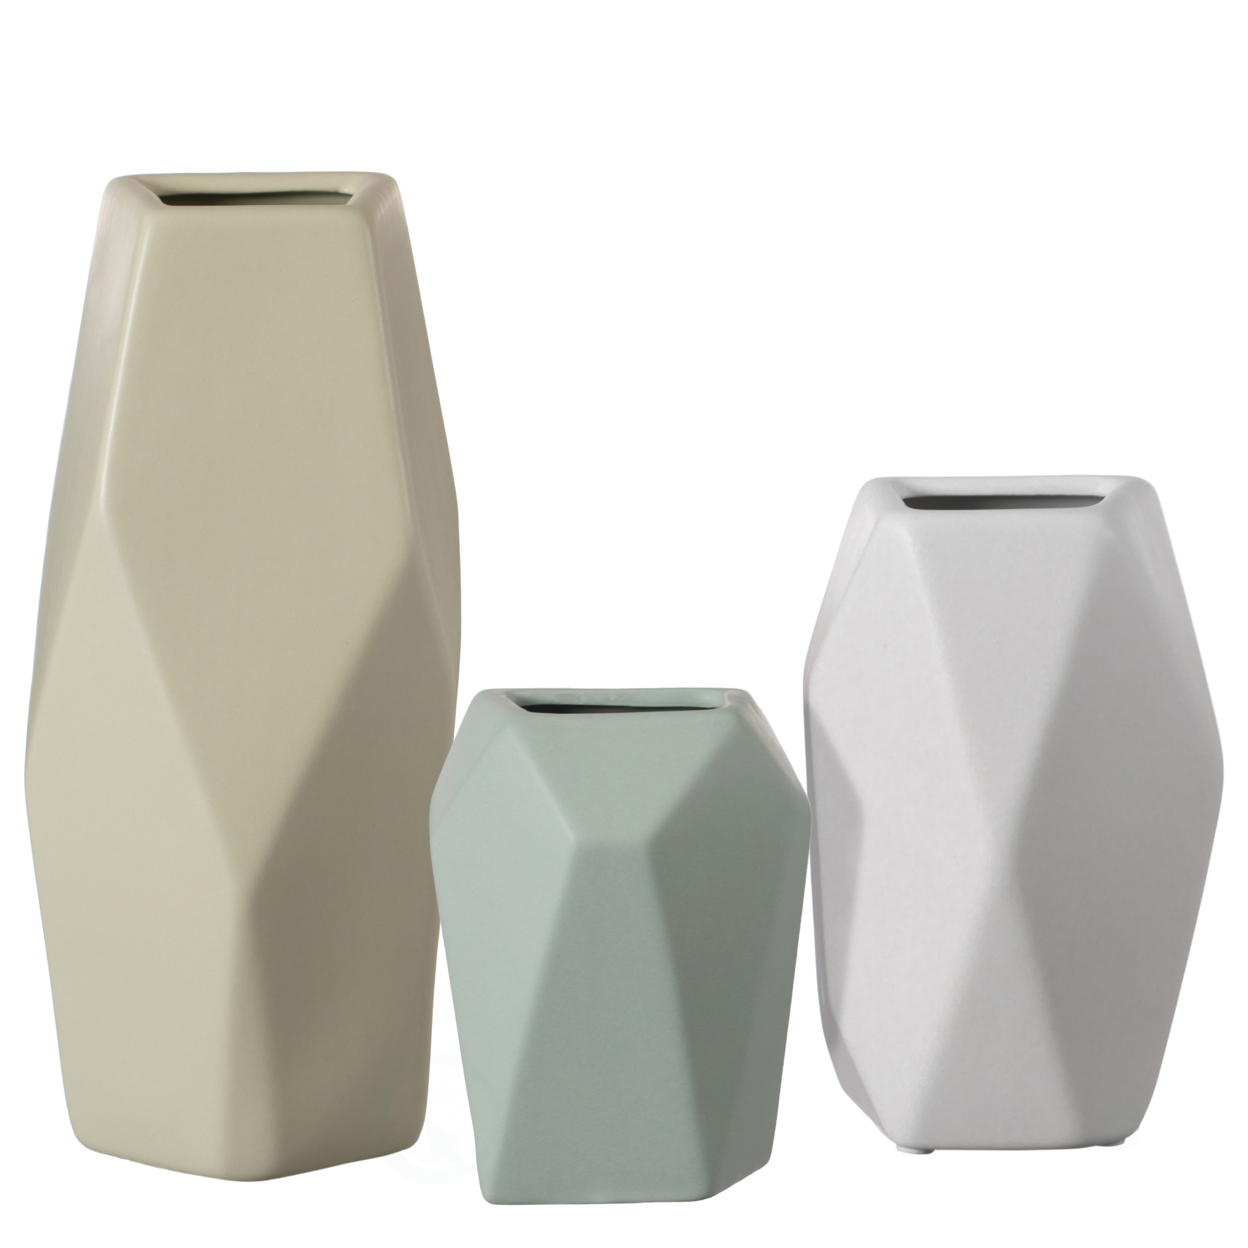 Decorative Ceramic Multi Paned Vase, Modern Style Centerpiece Table Vase - Green